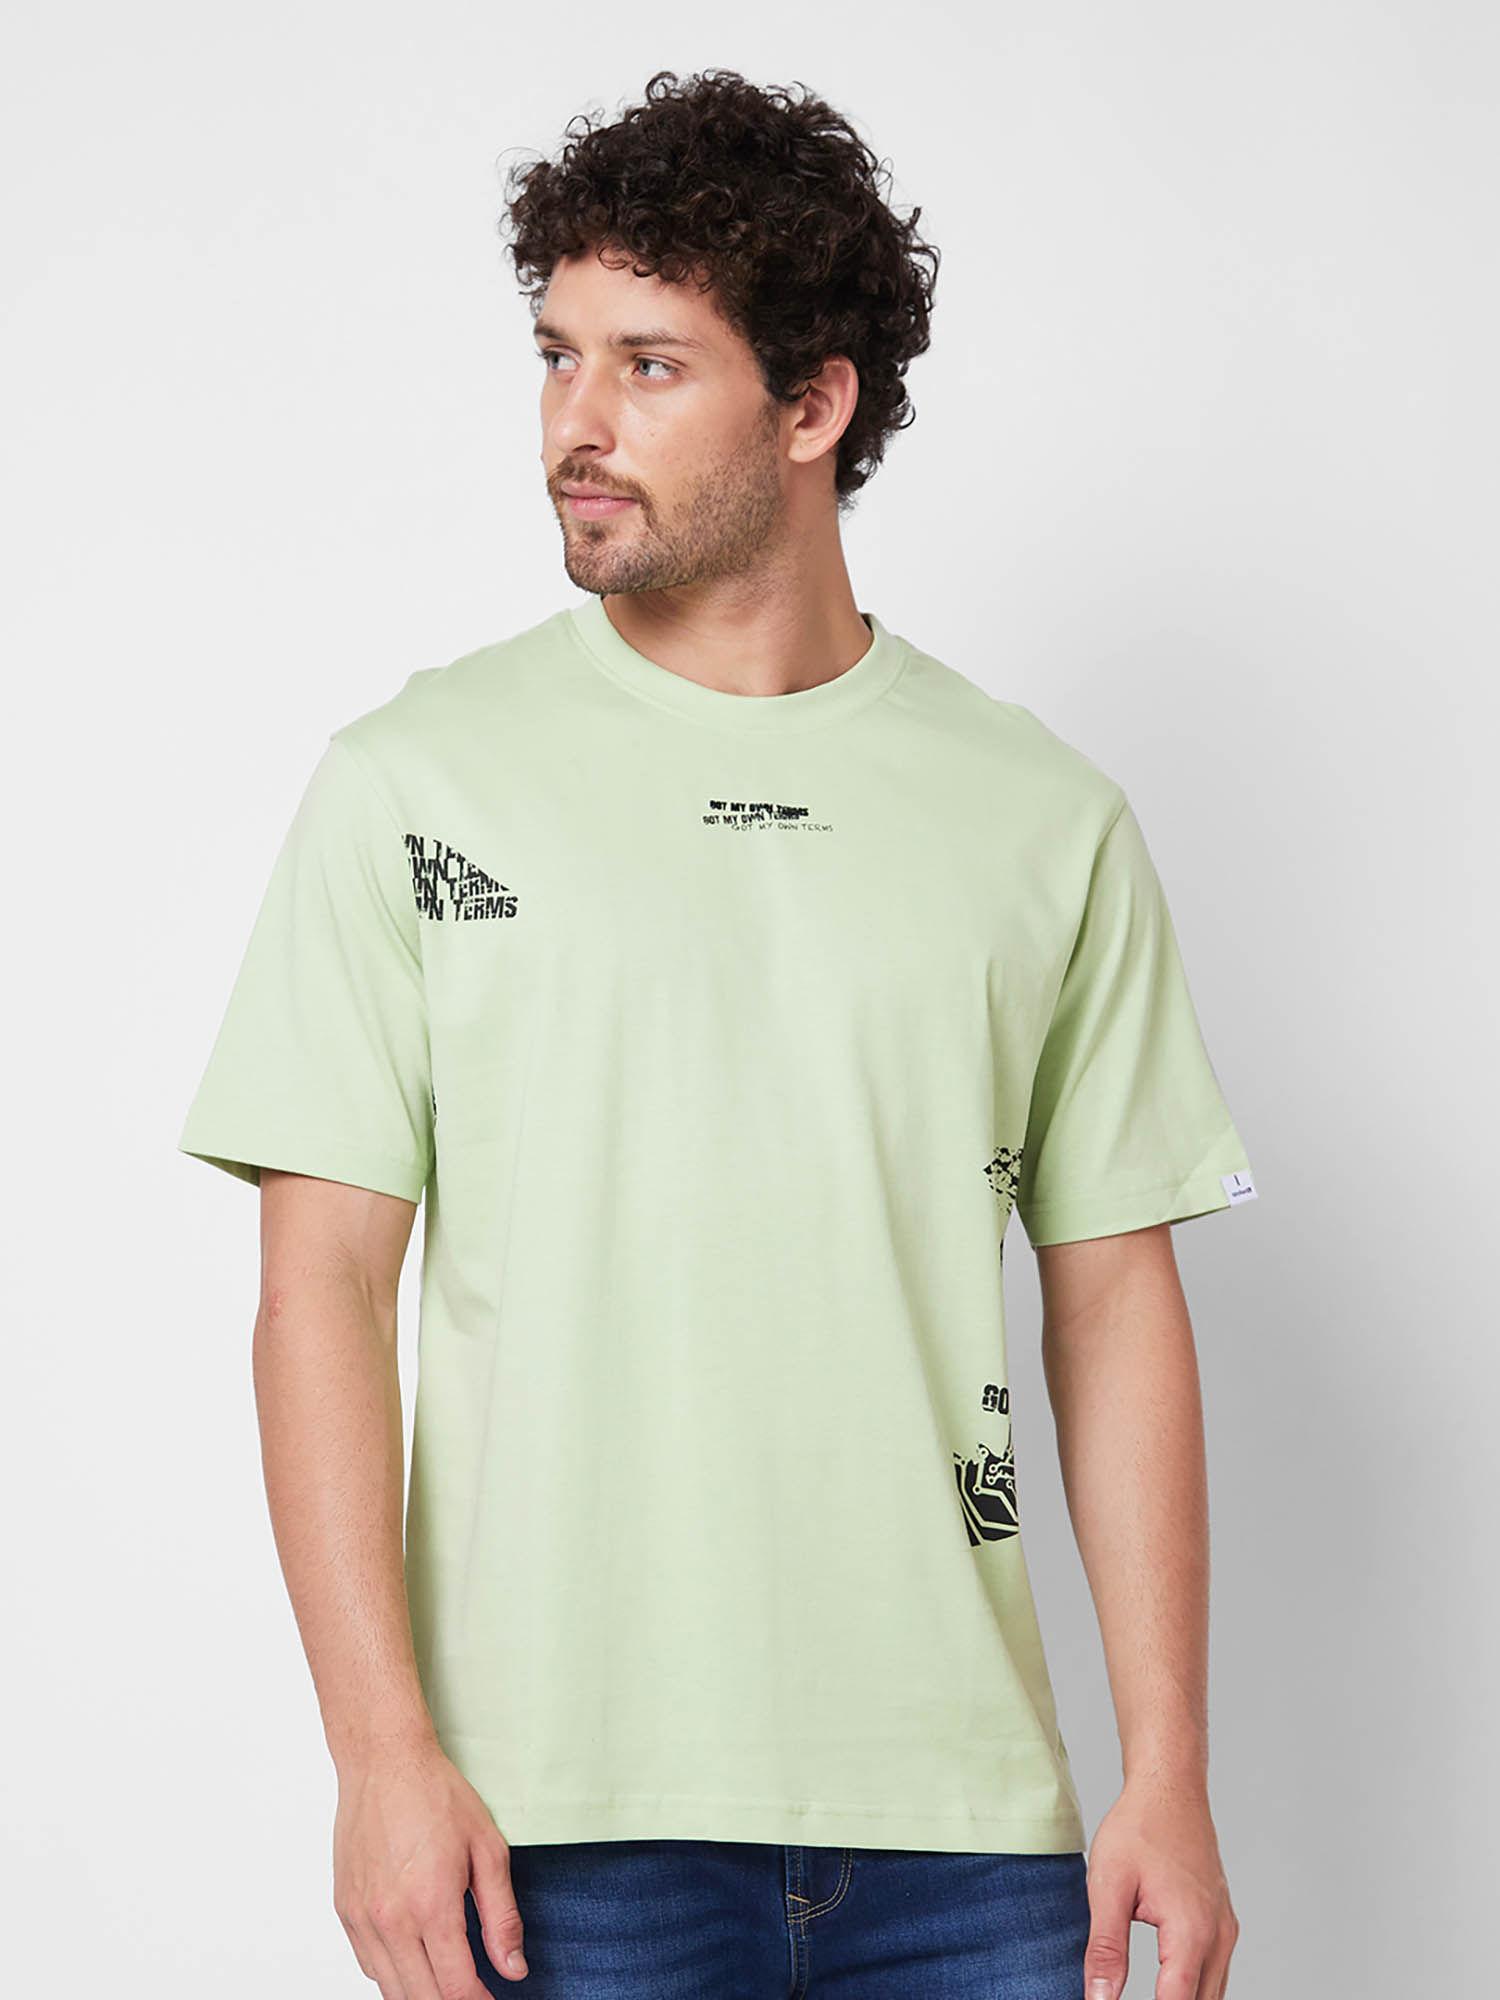 round-neck-half-sleeves-green-t-shirt-for-men